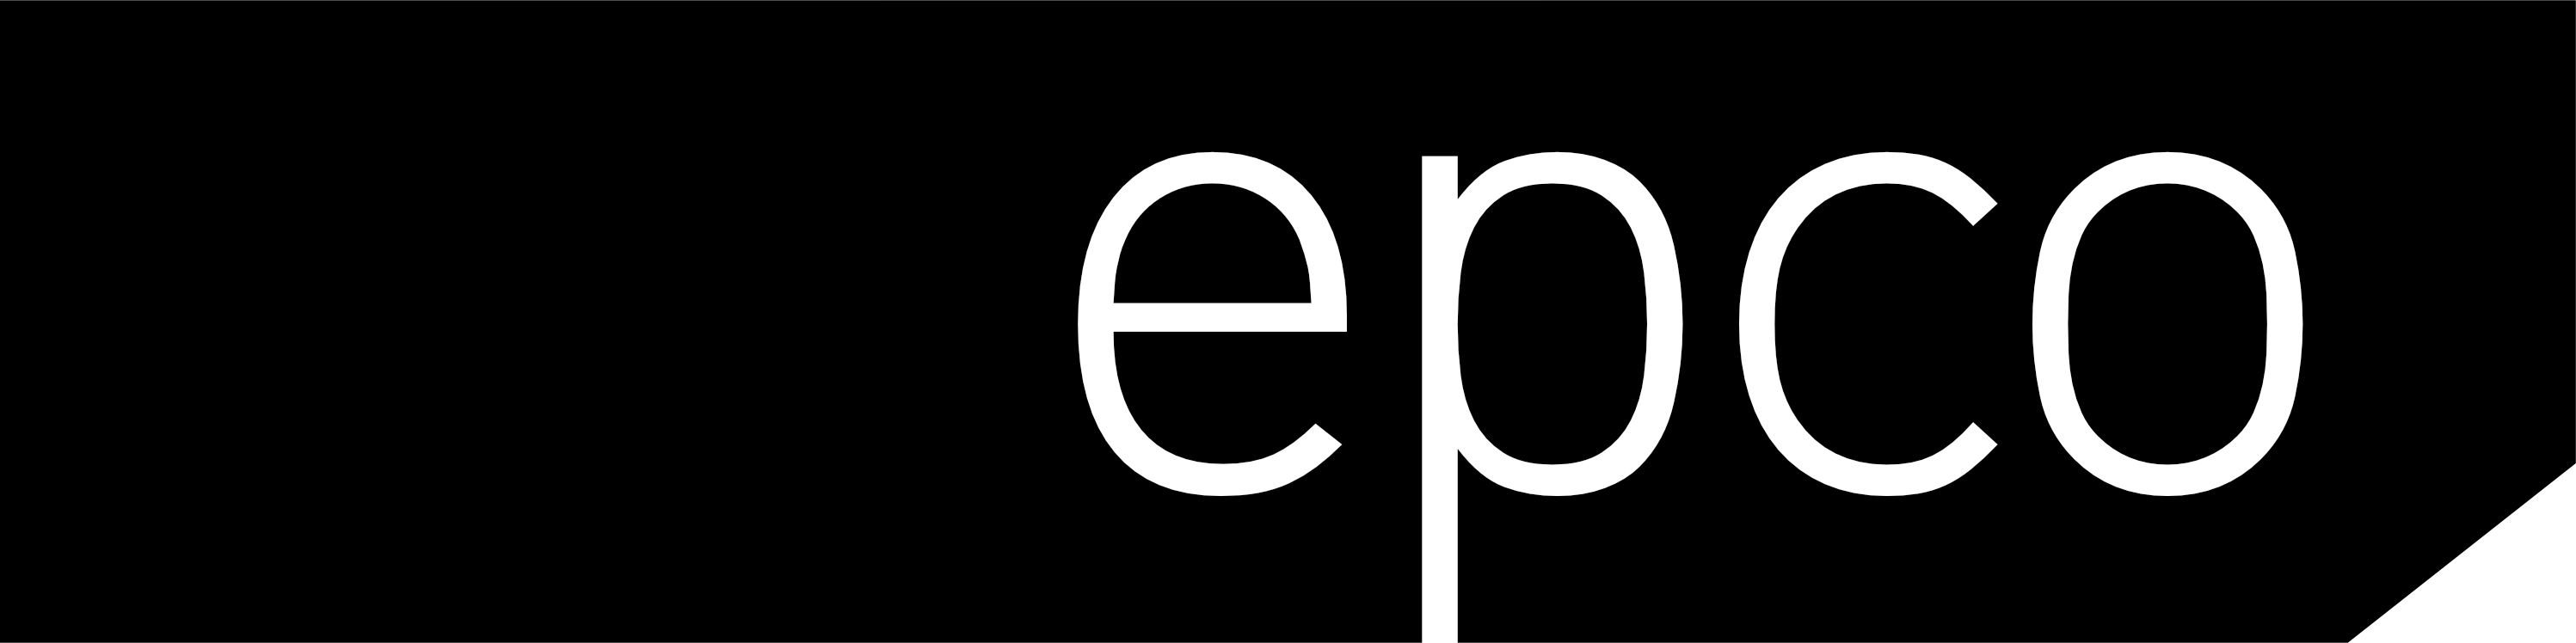 epco-logo